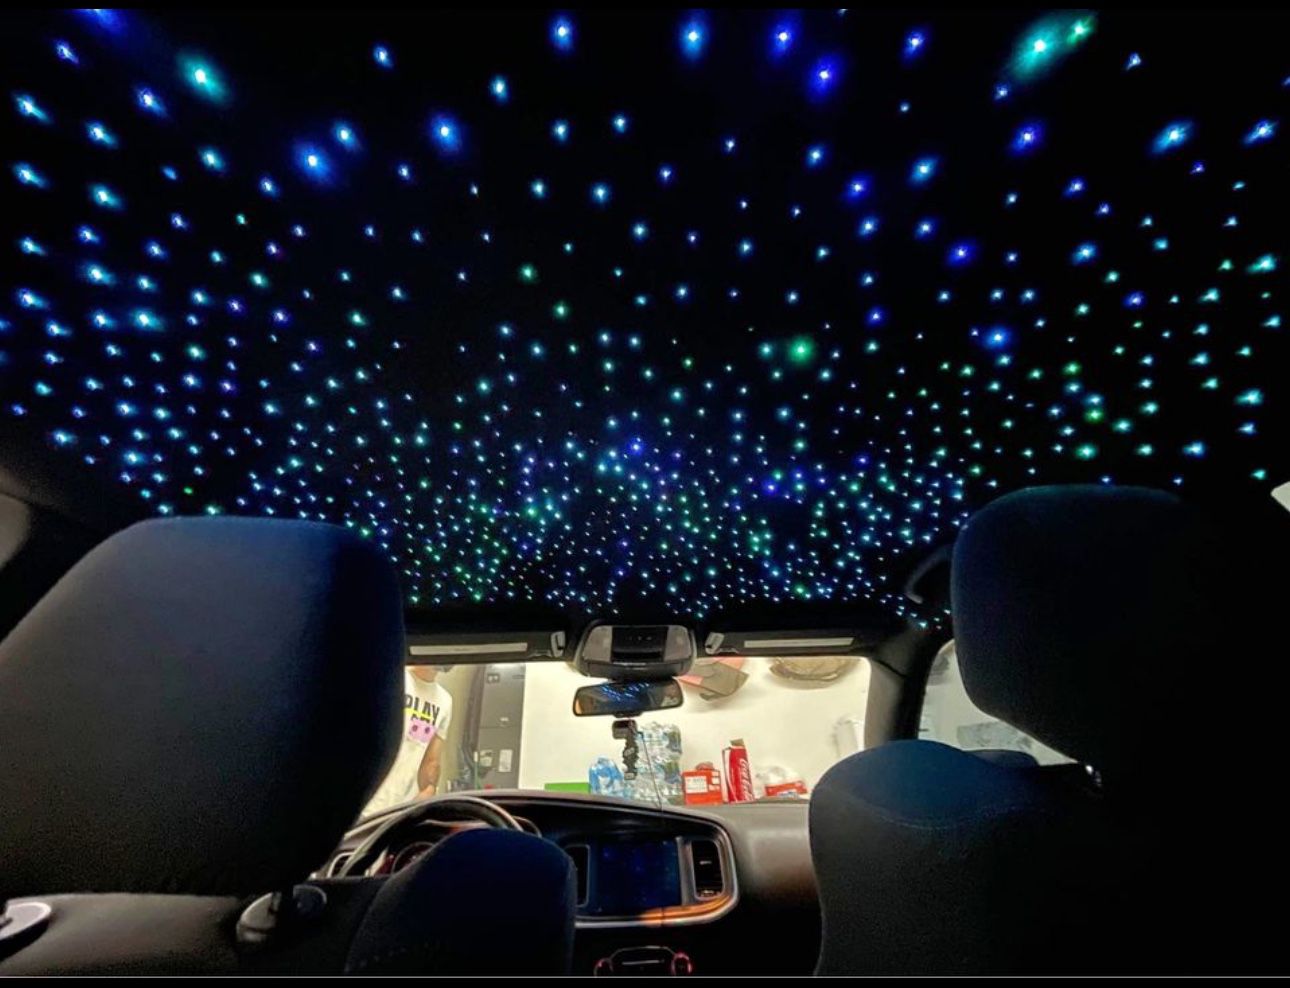 Car roof lights (starry sky)